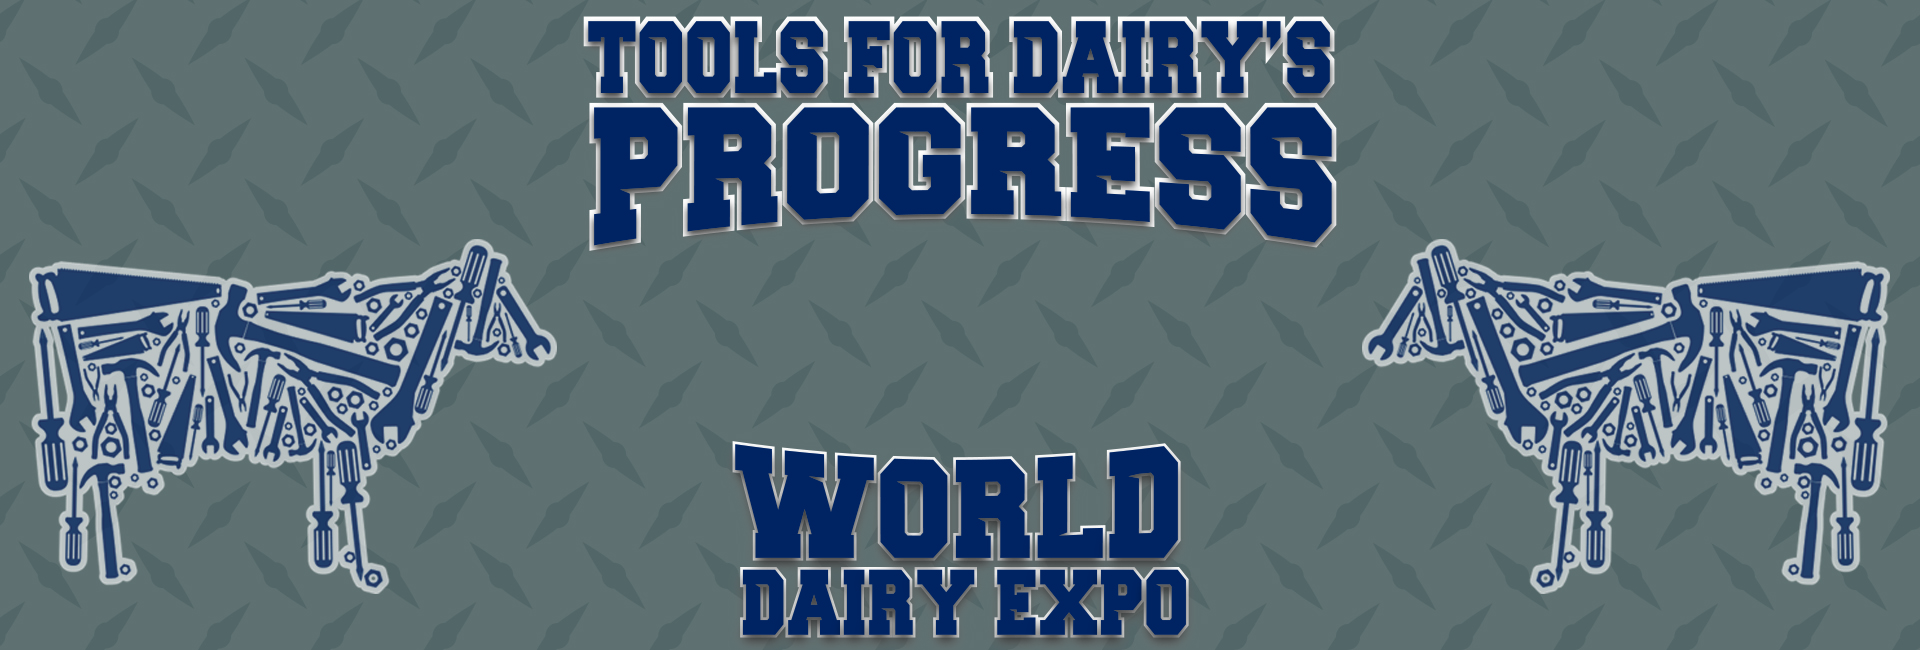 2019 World Dairy Expo